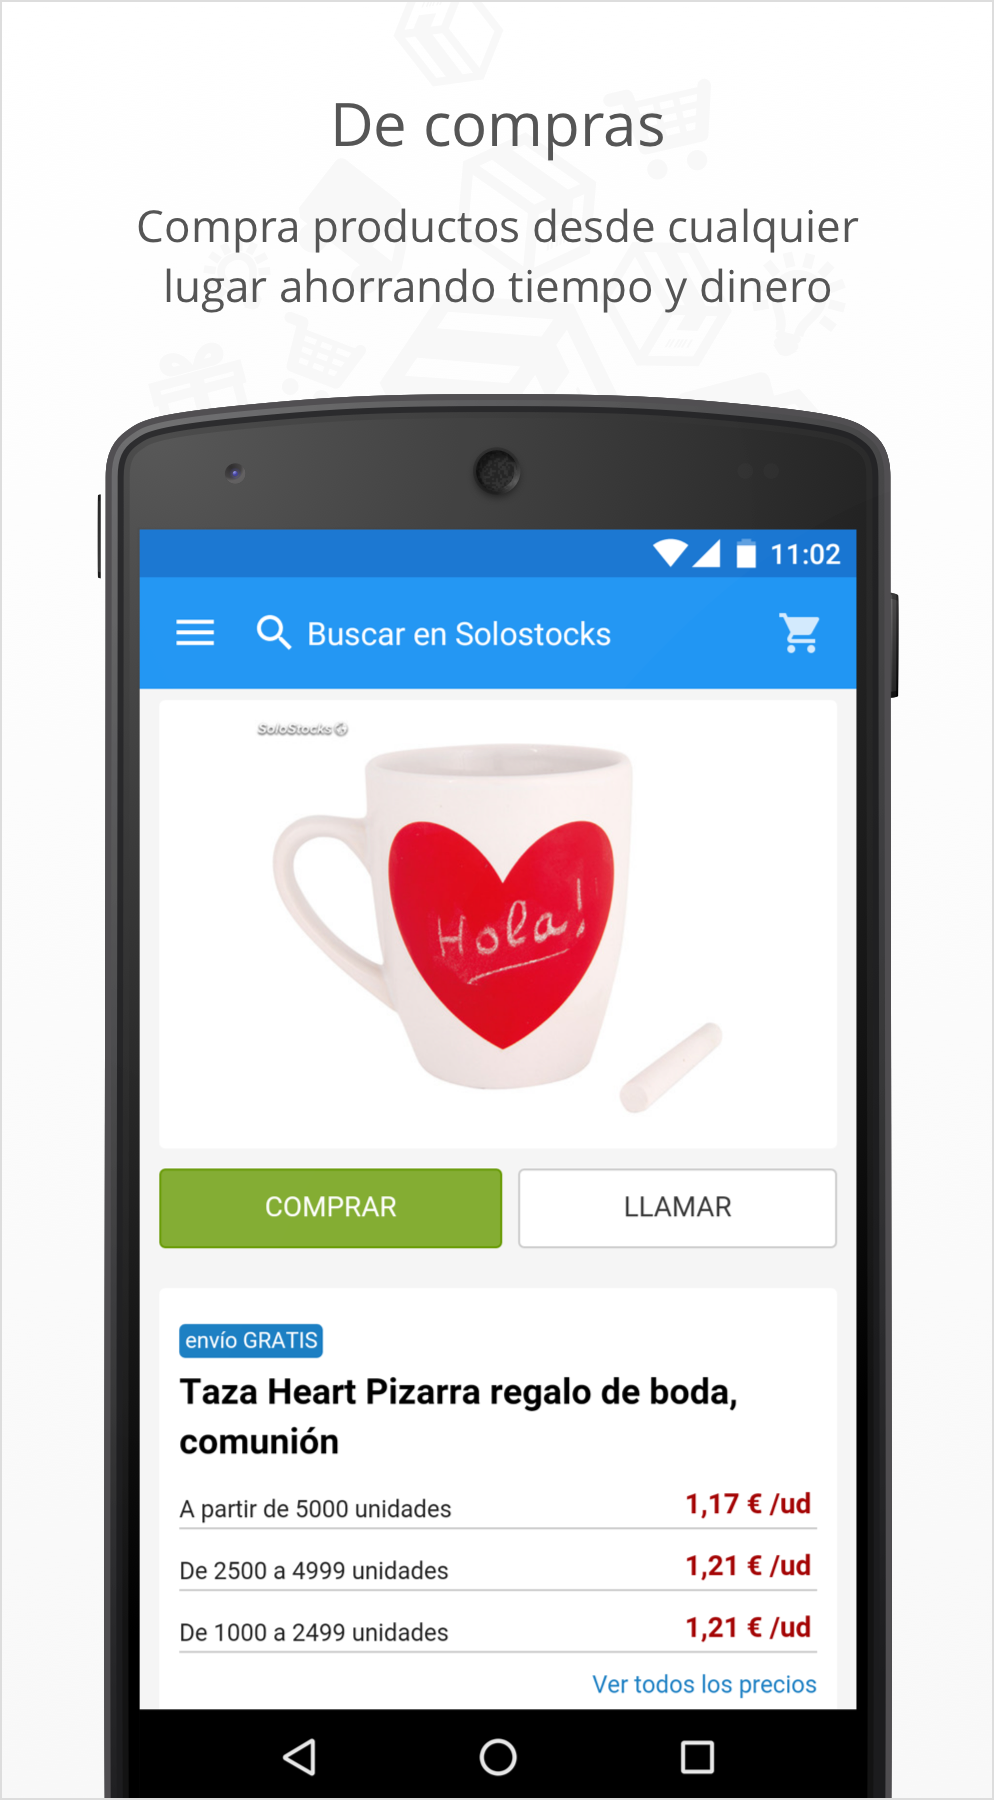 Android application SoloStocks compras screenshort